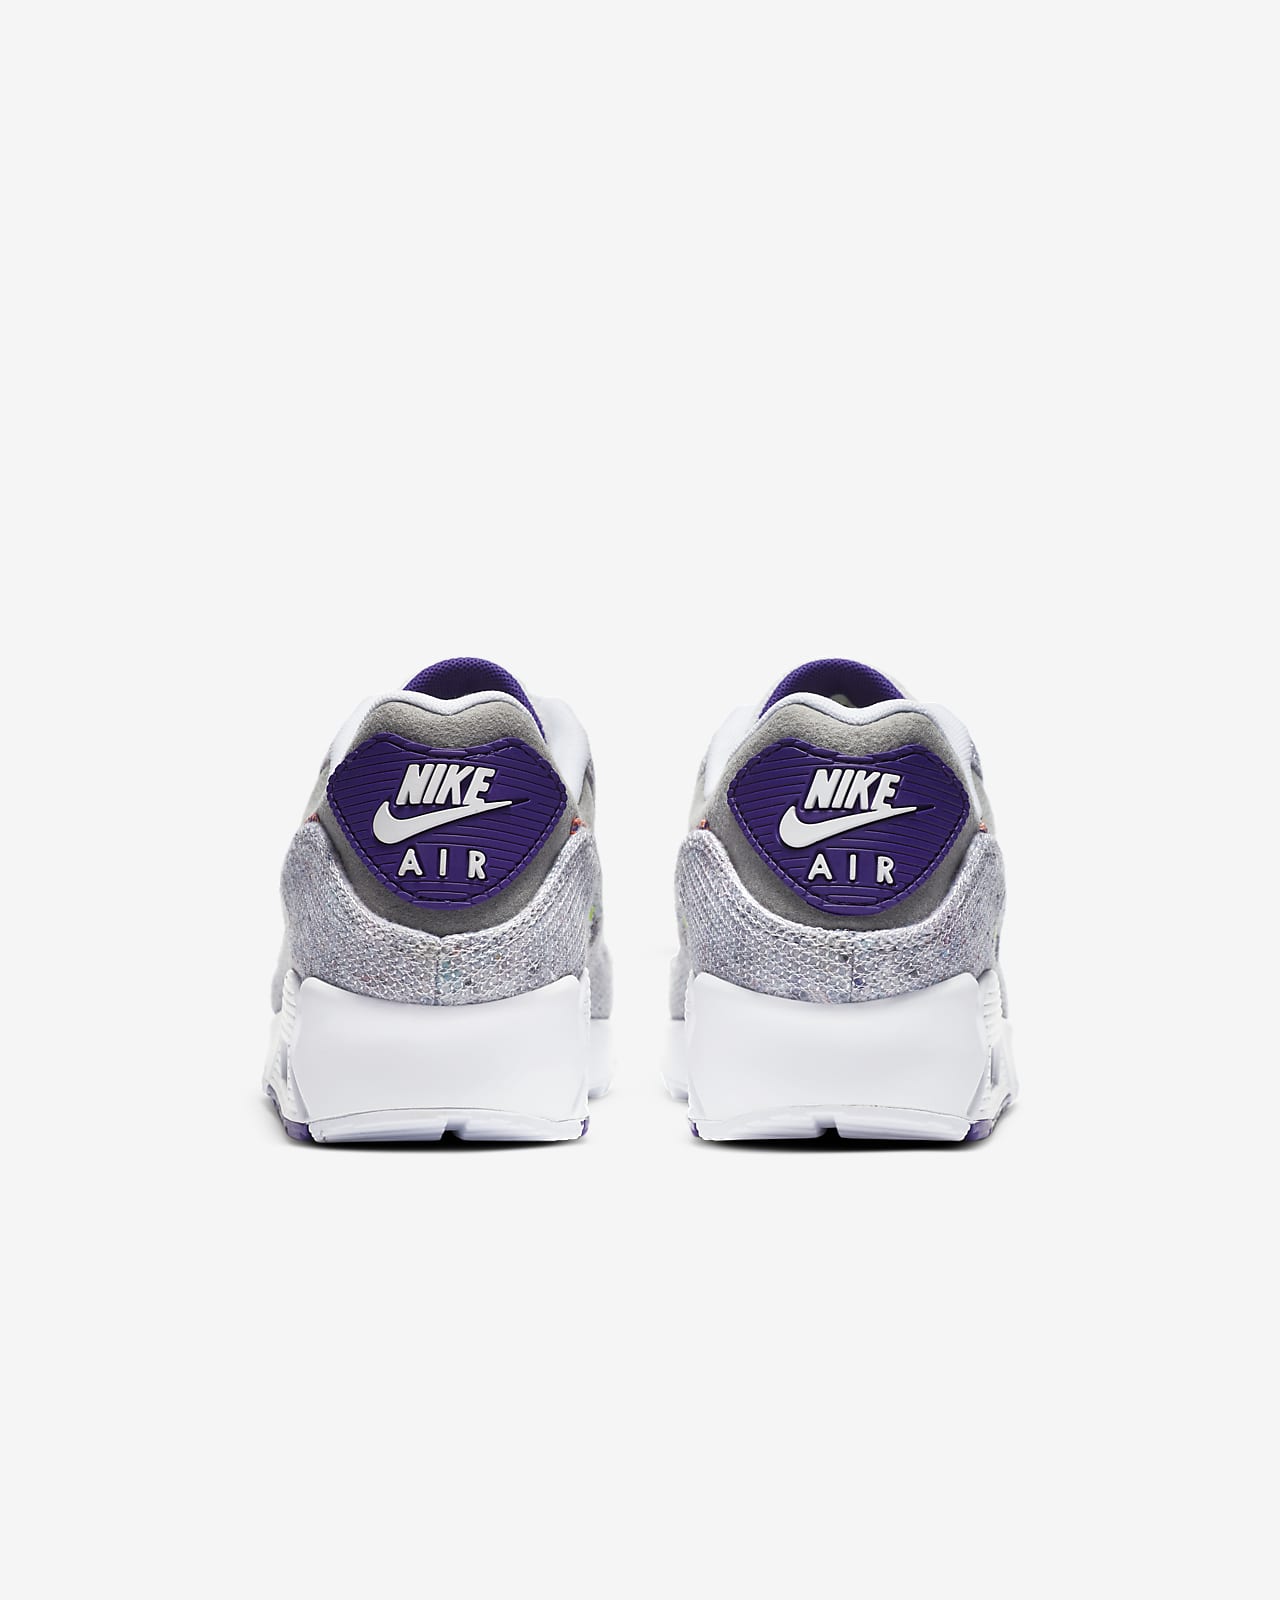 nike air max shoes purple